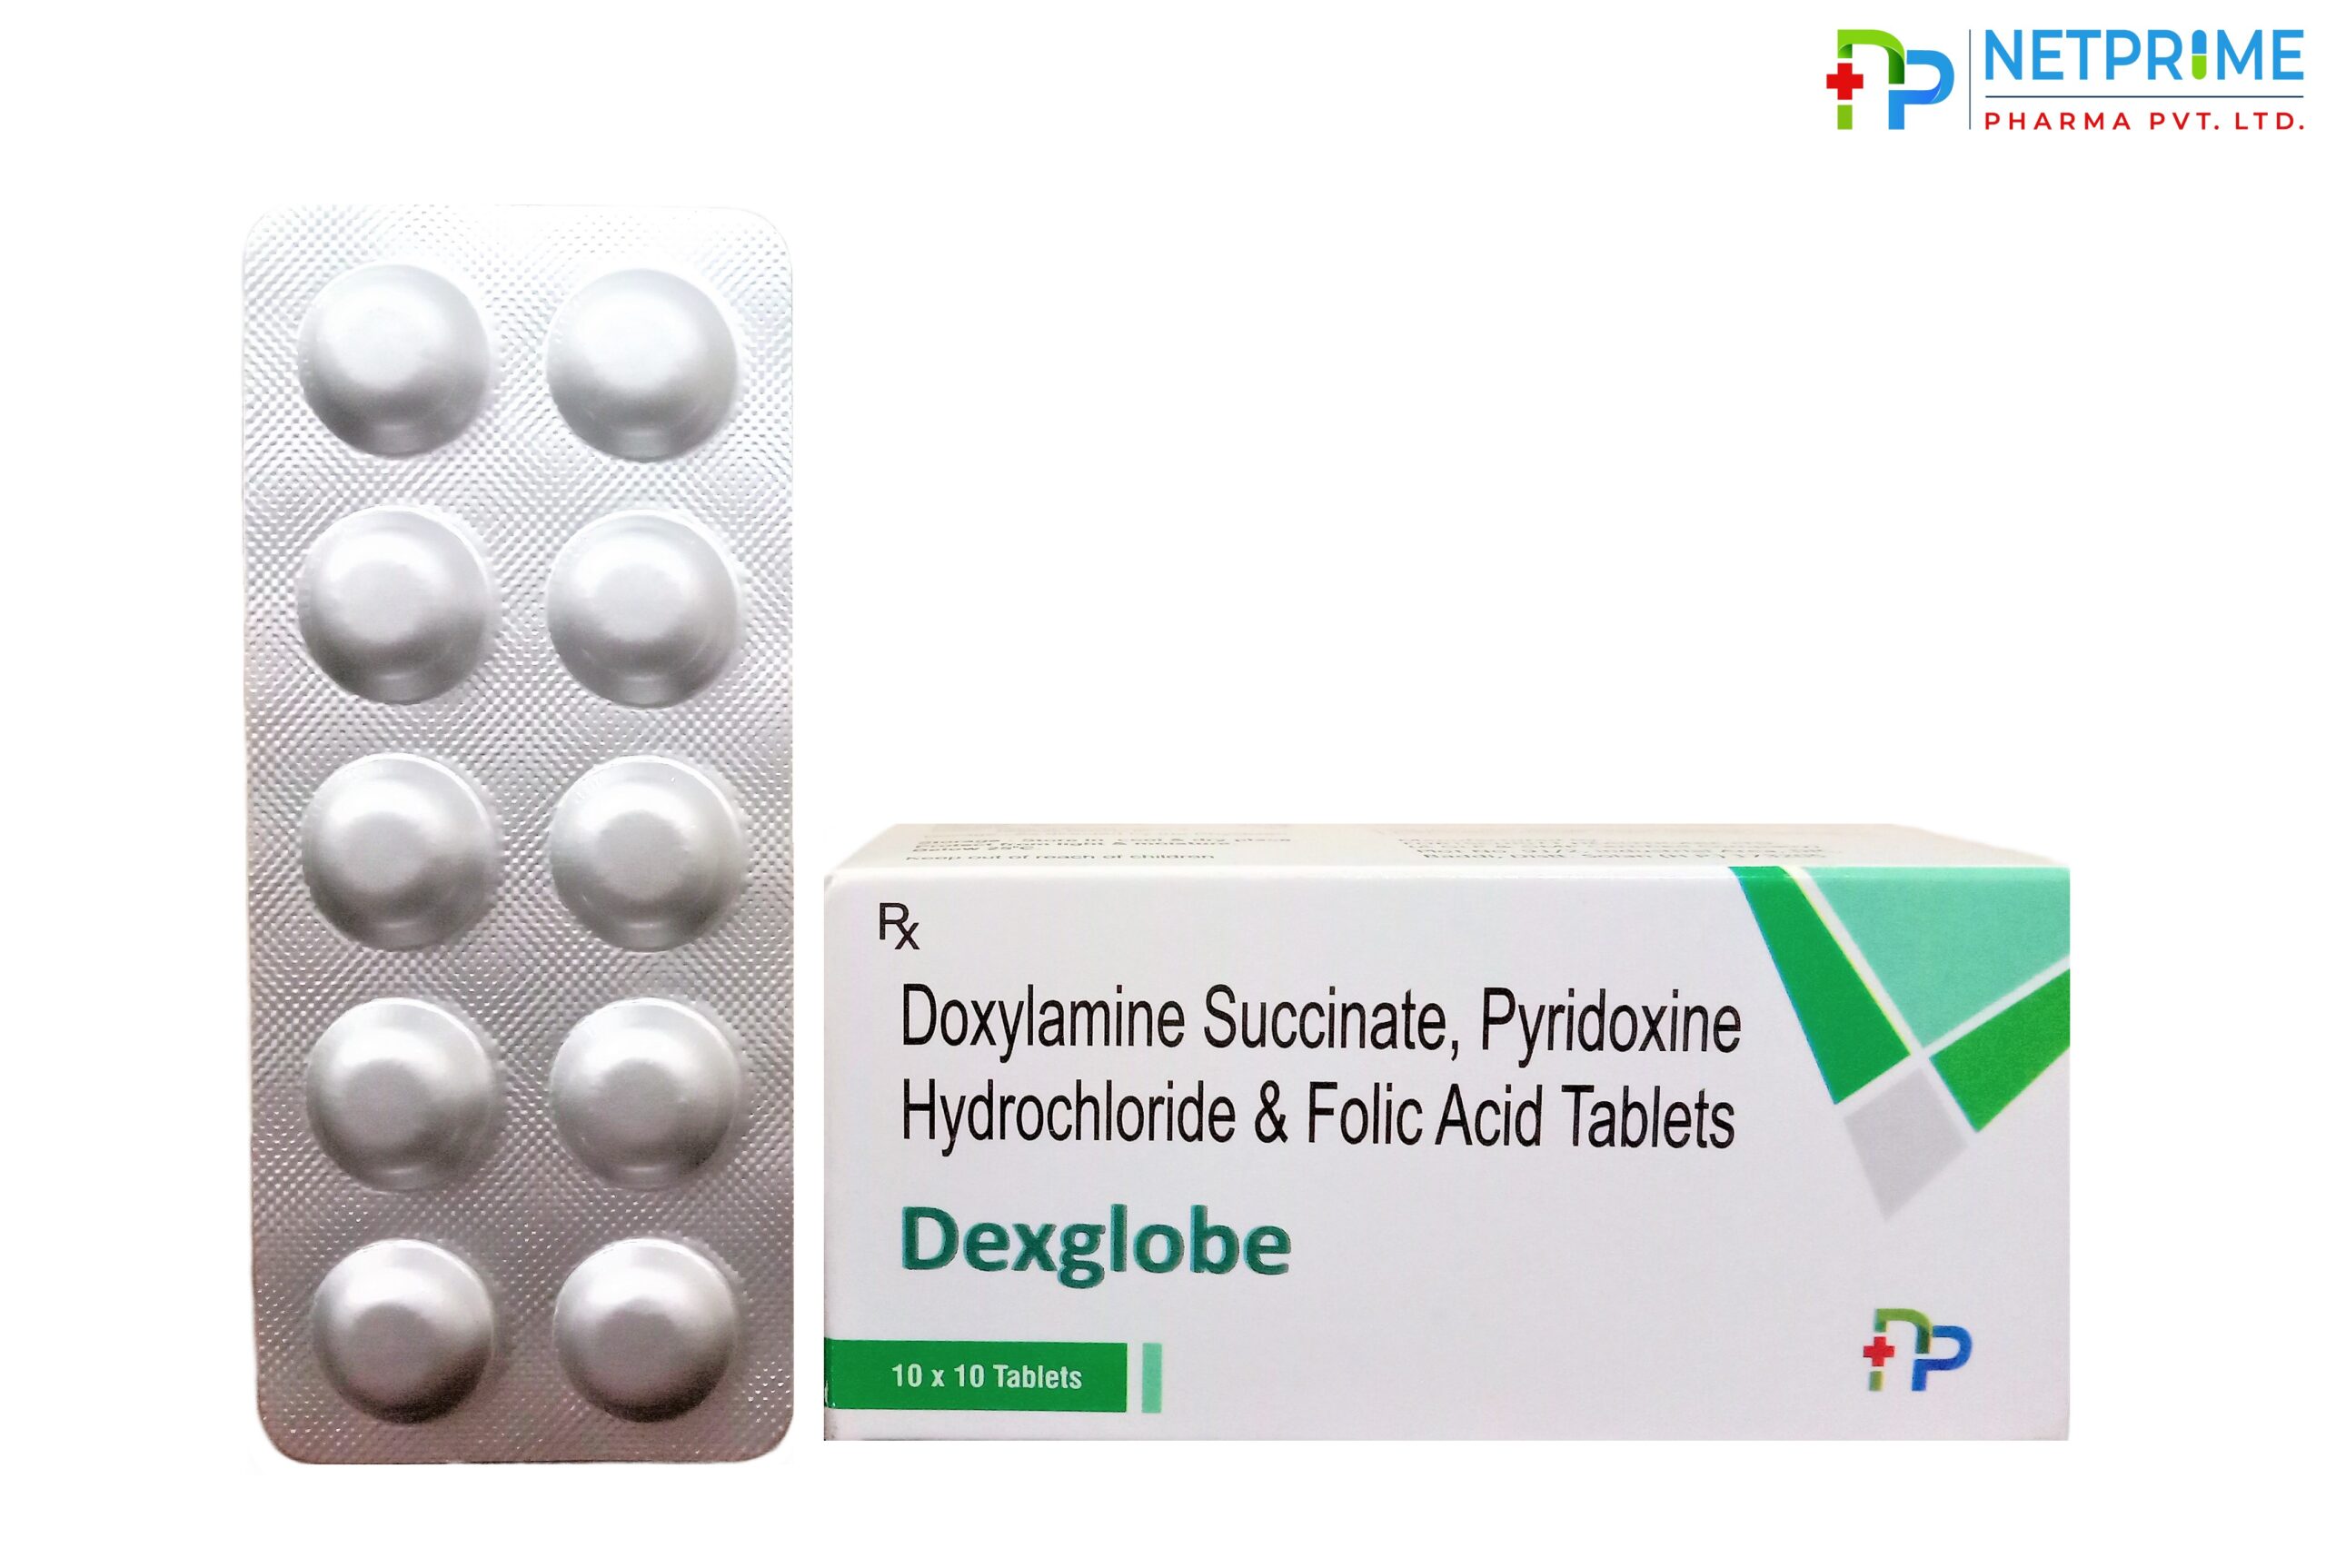 Doxylamine Succinate, Pyridoxine Hydrochloride and Folic Acid Tablets